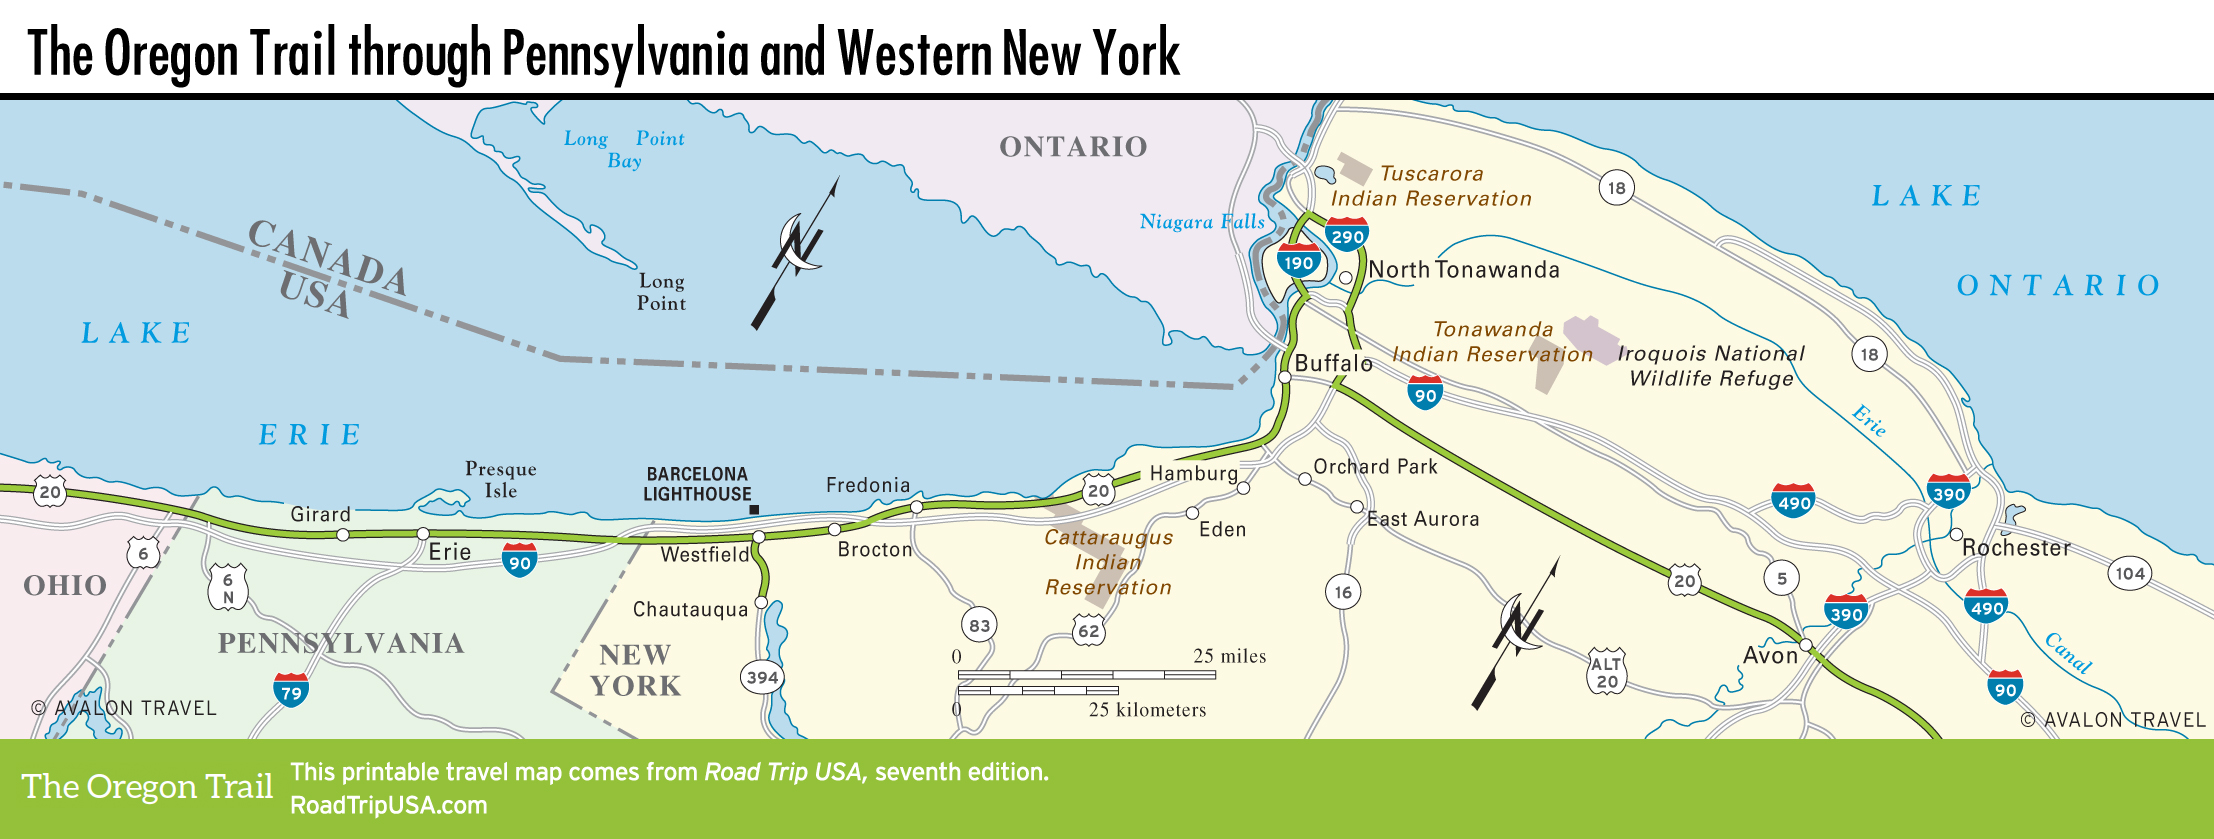 Pennsylvania Travel Map.